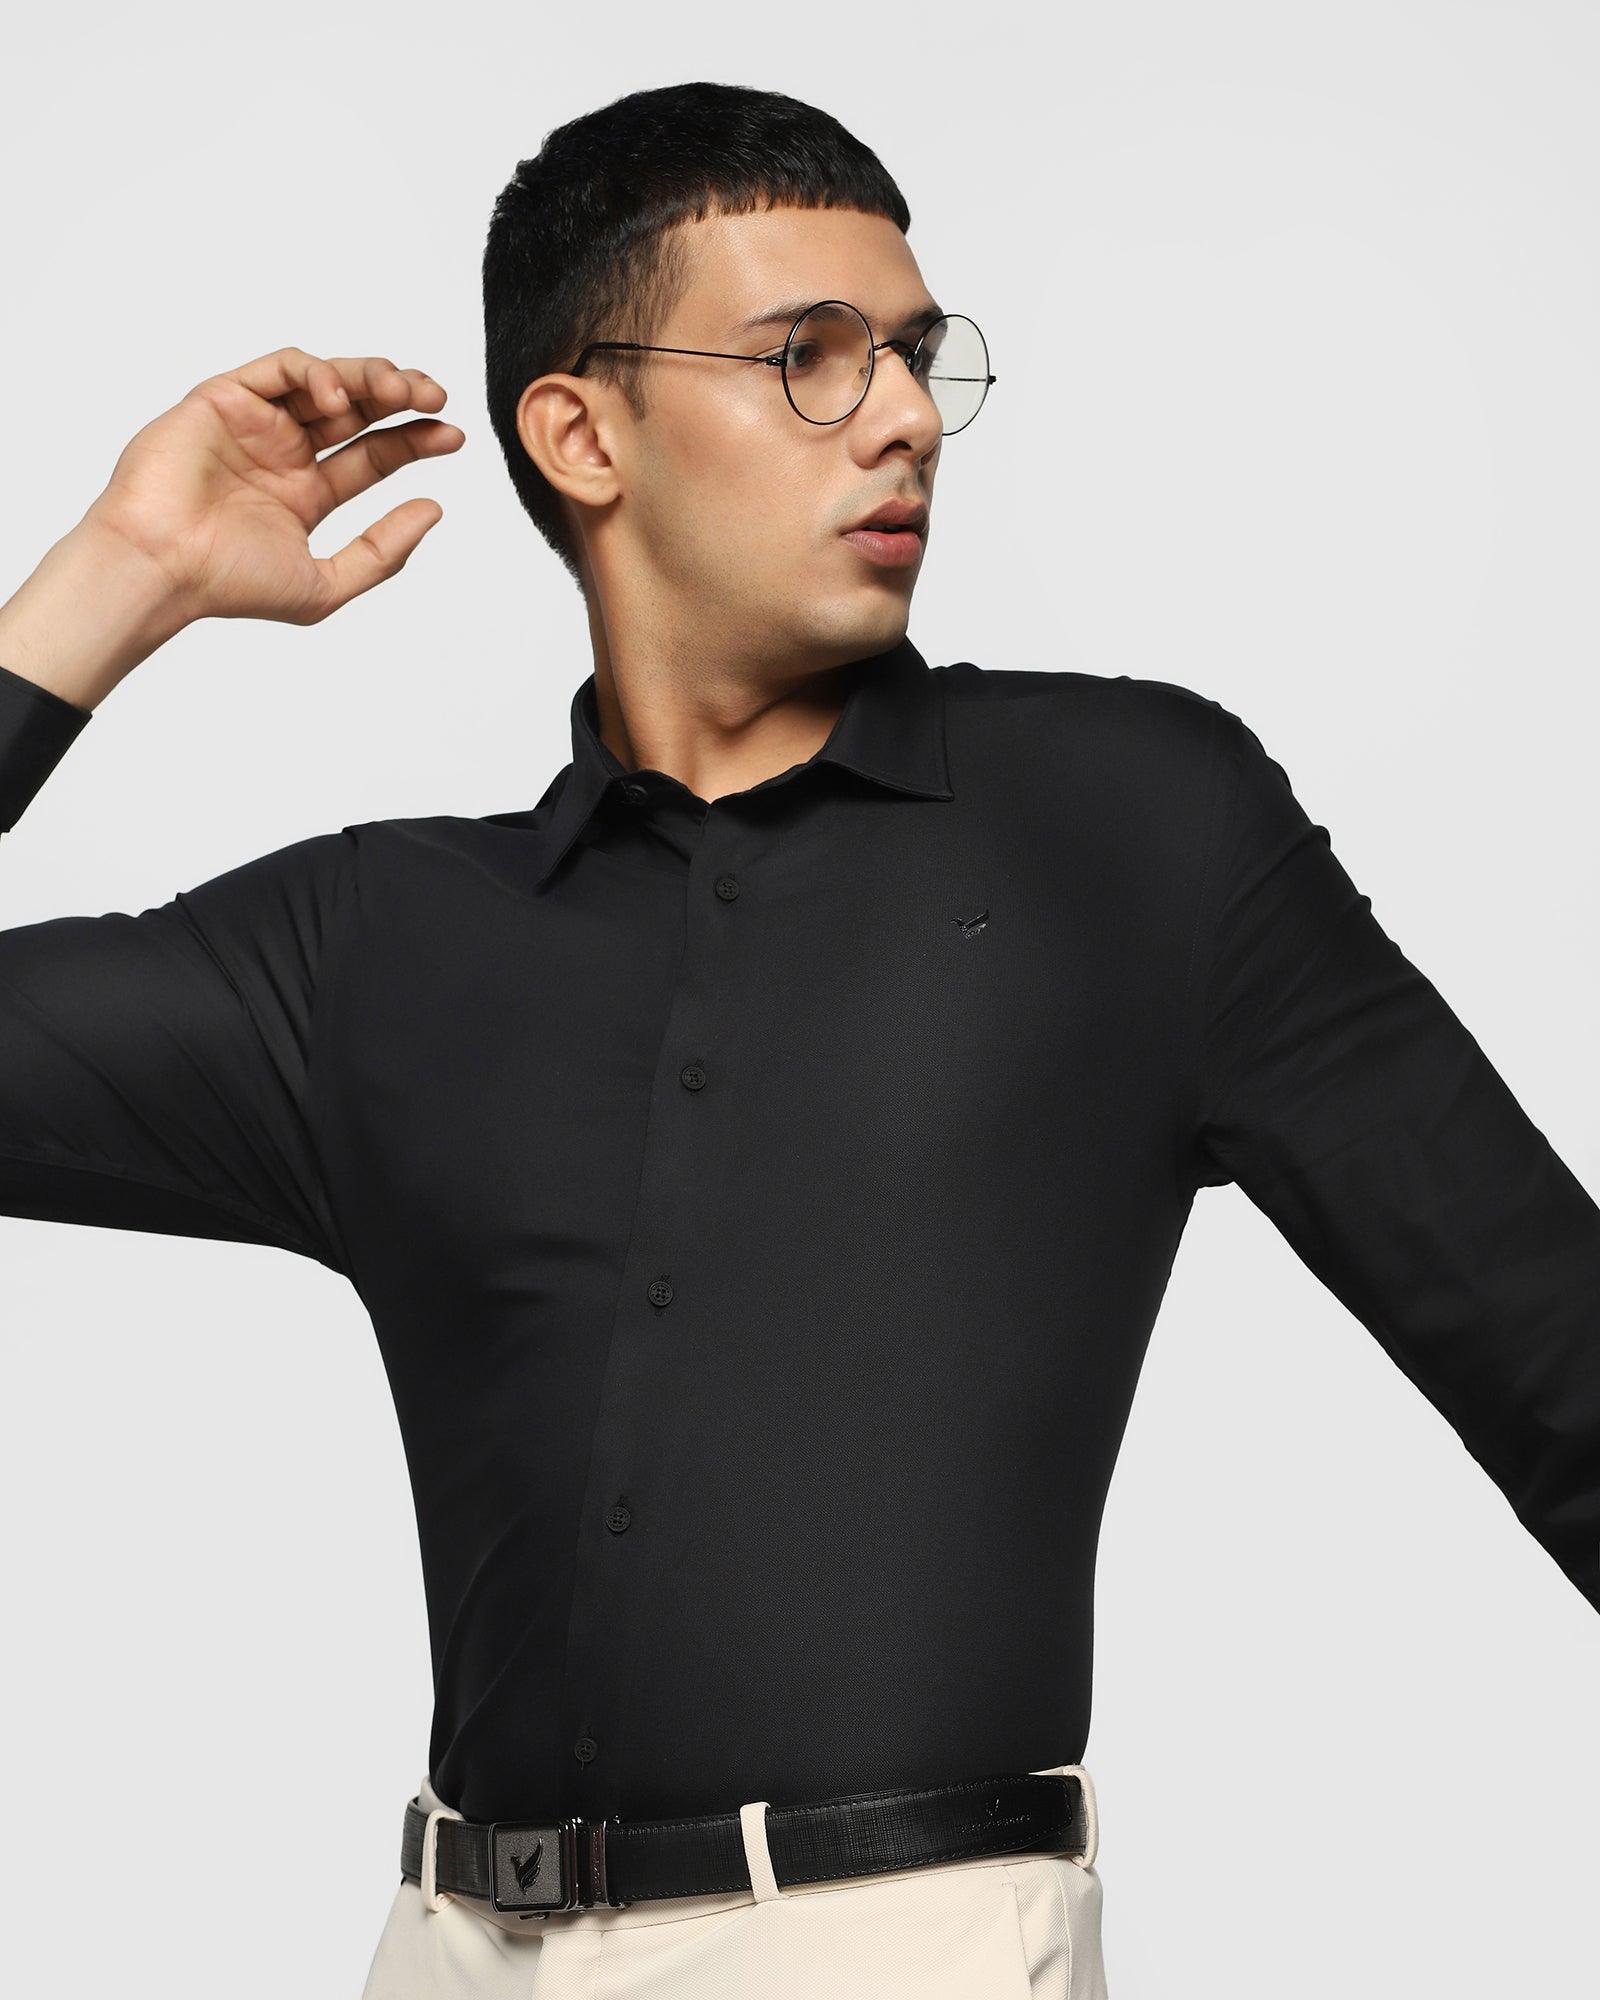 TechPro Formal Black Solid Shirt - Tartan